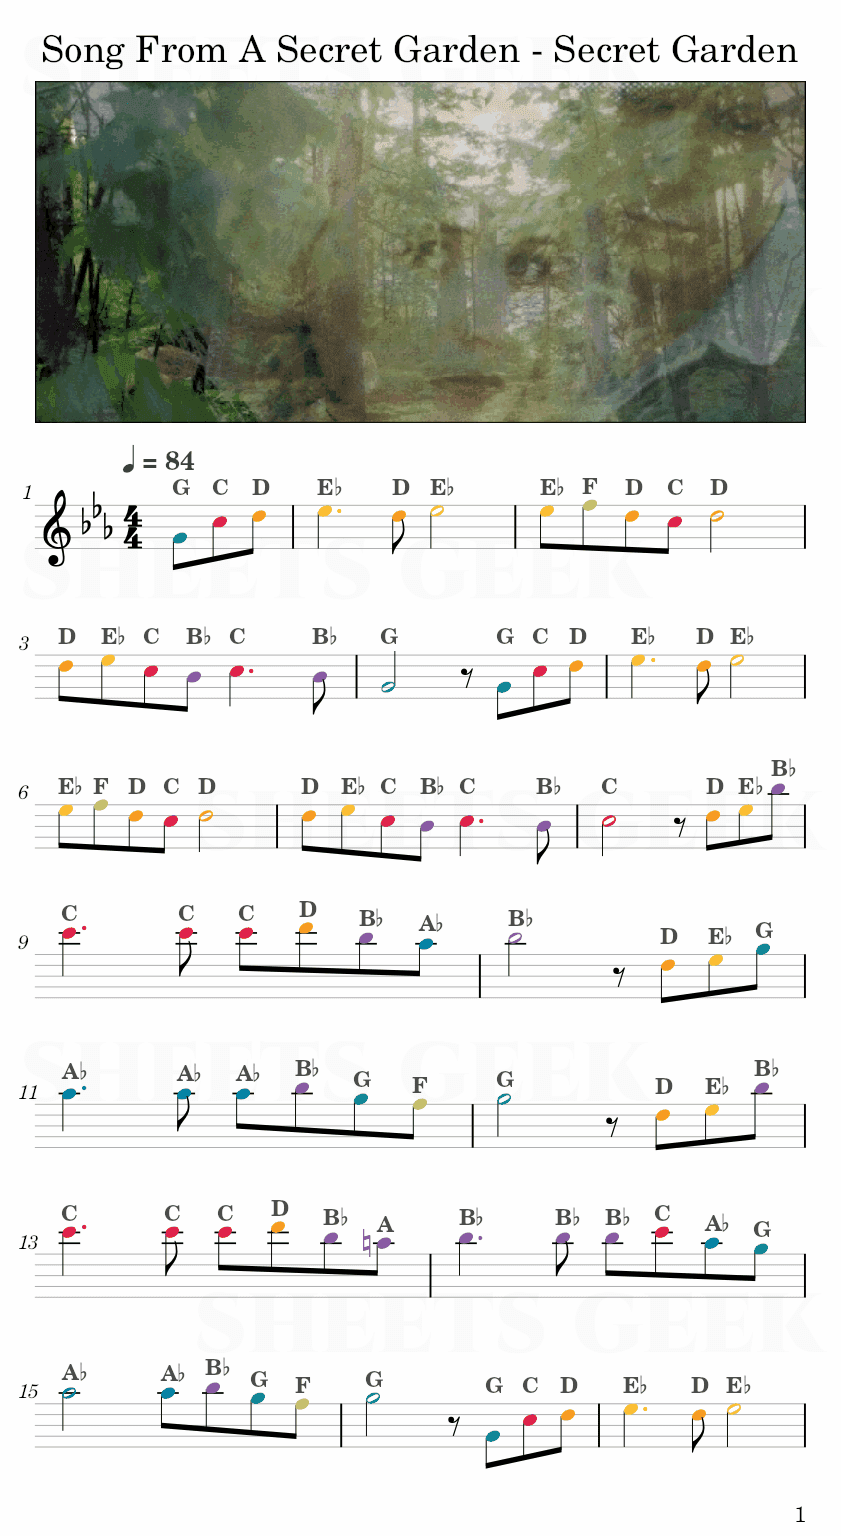 Song From A Secret Garden - Secret Garden Easy Sheet Music Free for piano, keyboard, flute, violin, sax, cello page 1